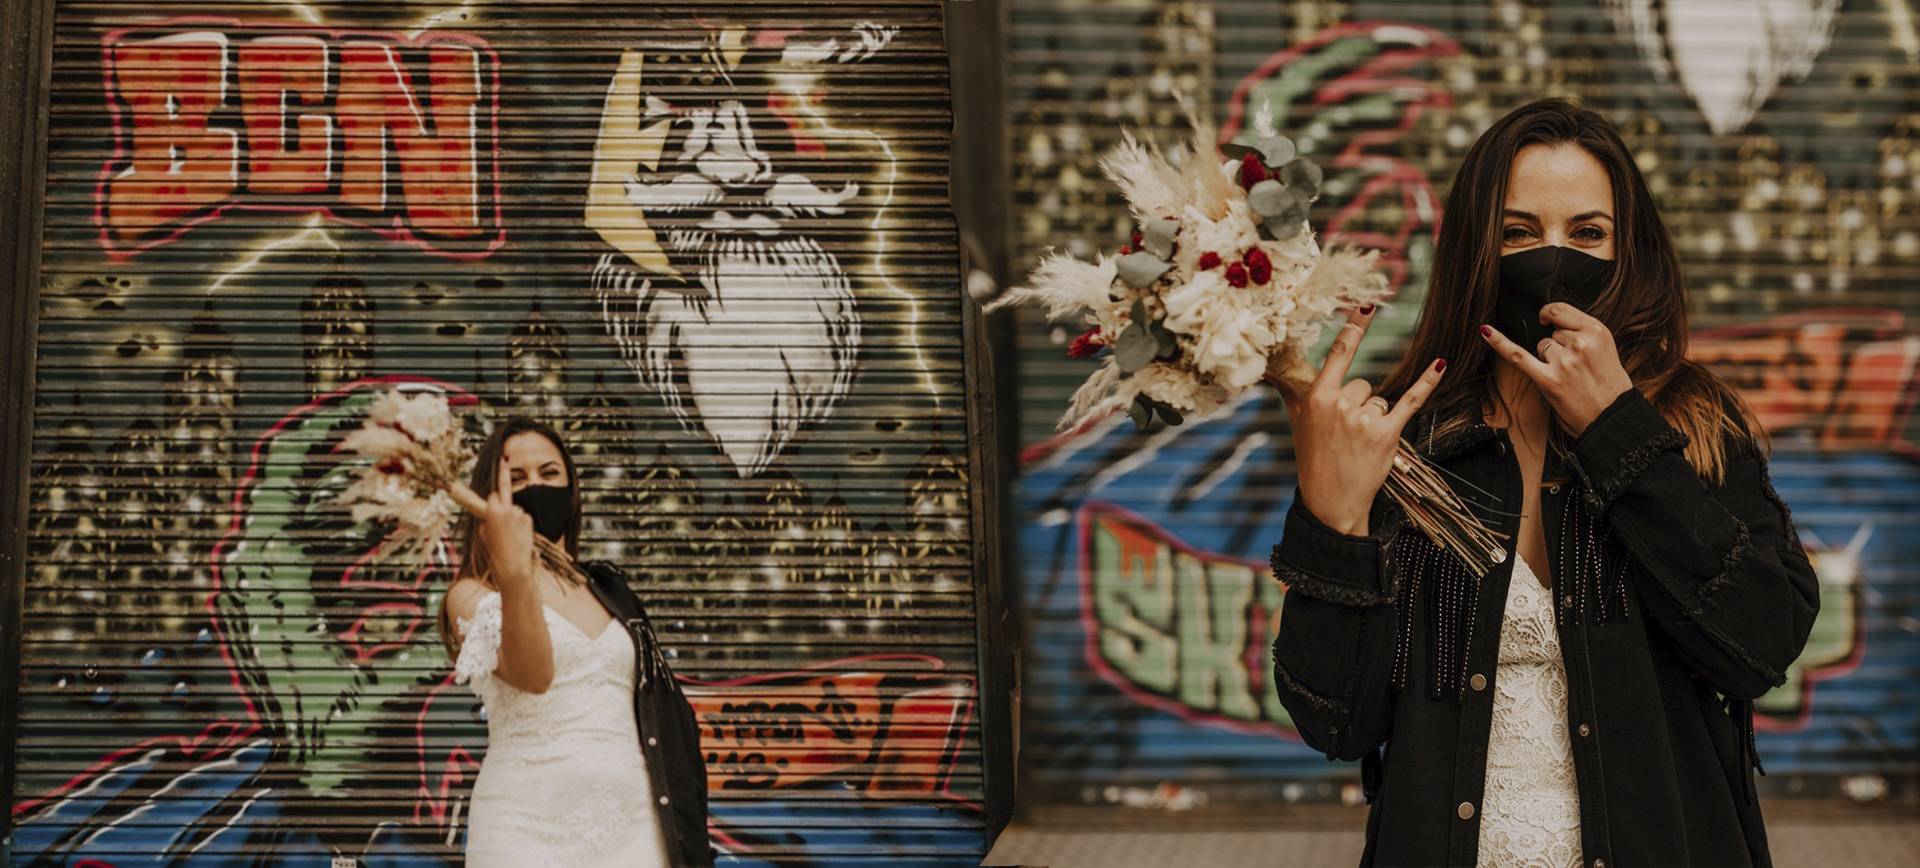 barcelona wedding - gothic quarter photoshoot with rock n roll bride